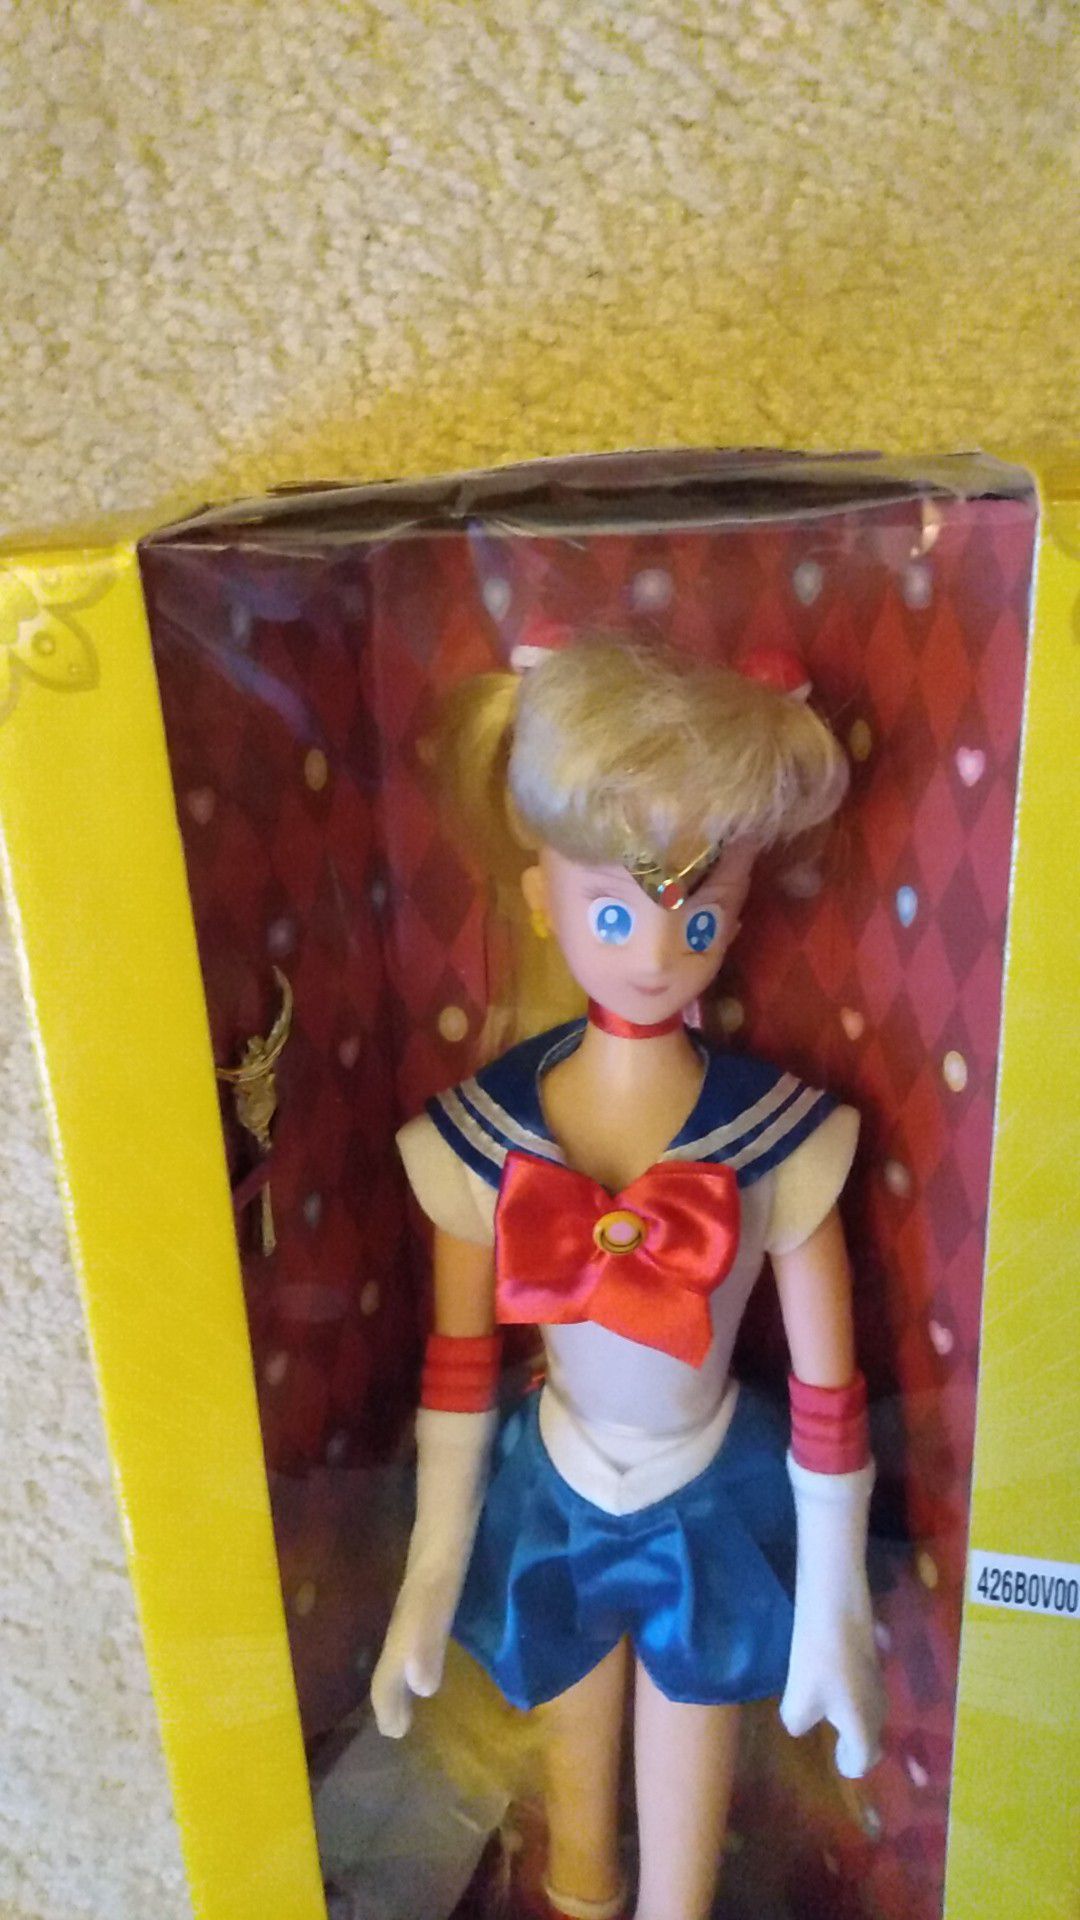 Rare 2000 Sailor Moon 17" doll from Irwin